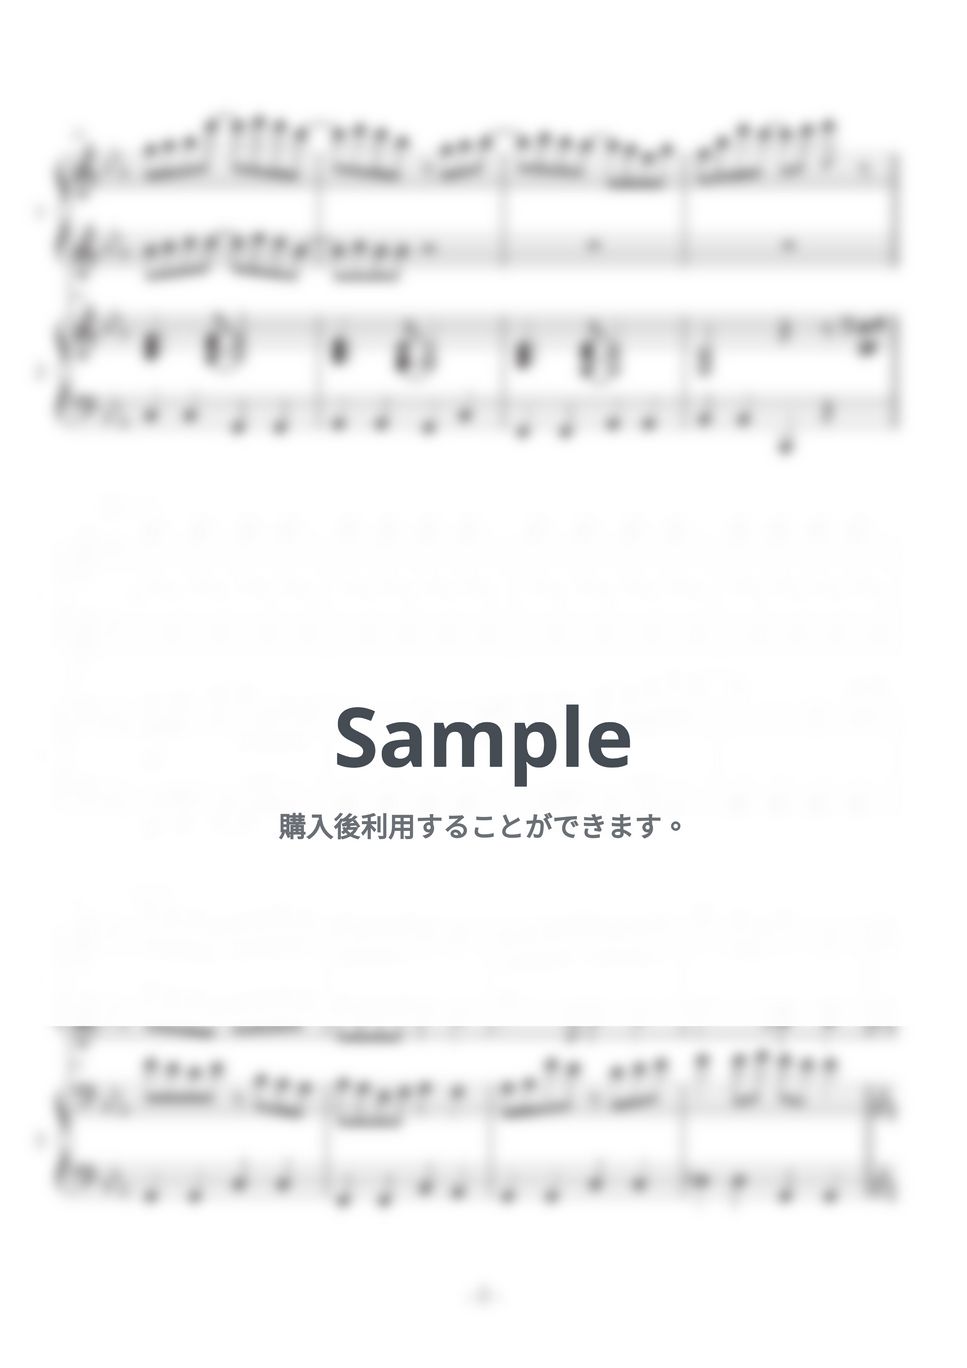 Snow Man - We'll go together (ピアノ連弾 / 『先生さようなら』主題歌) by Kanna Inoue